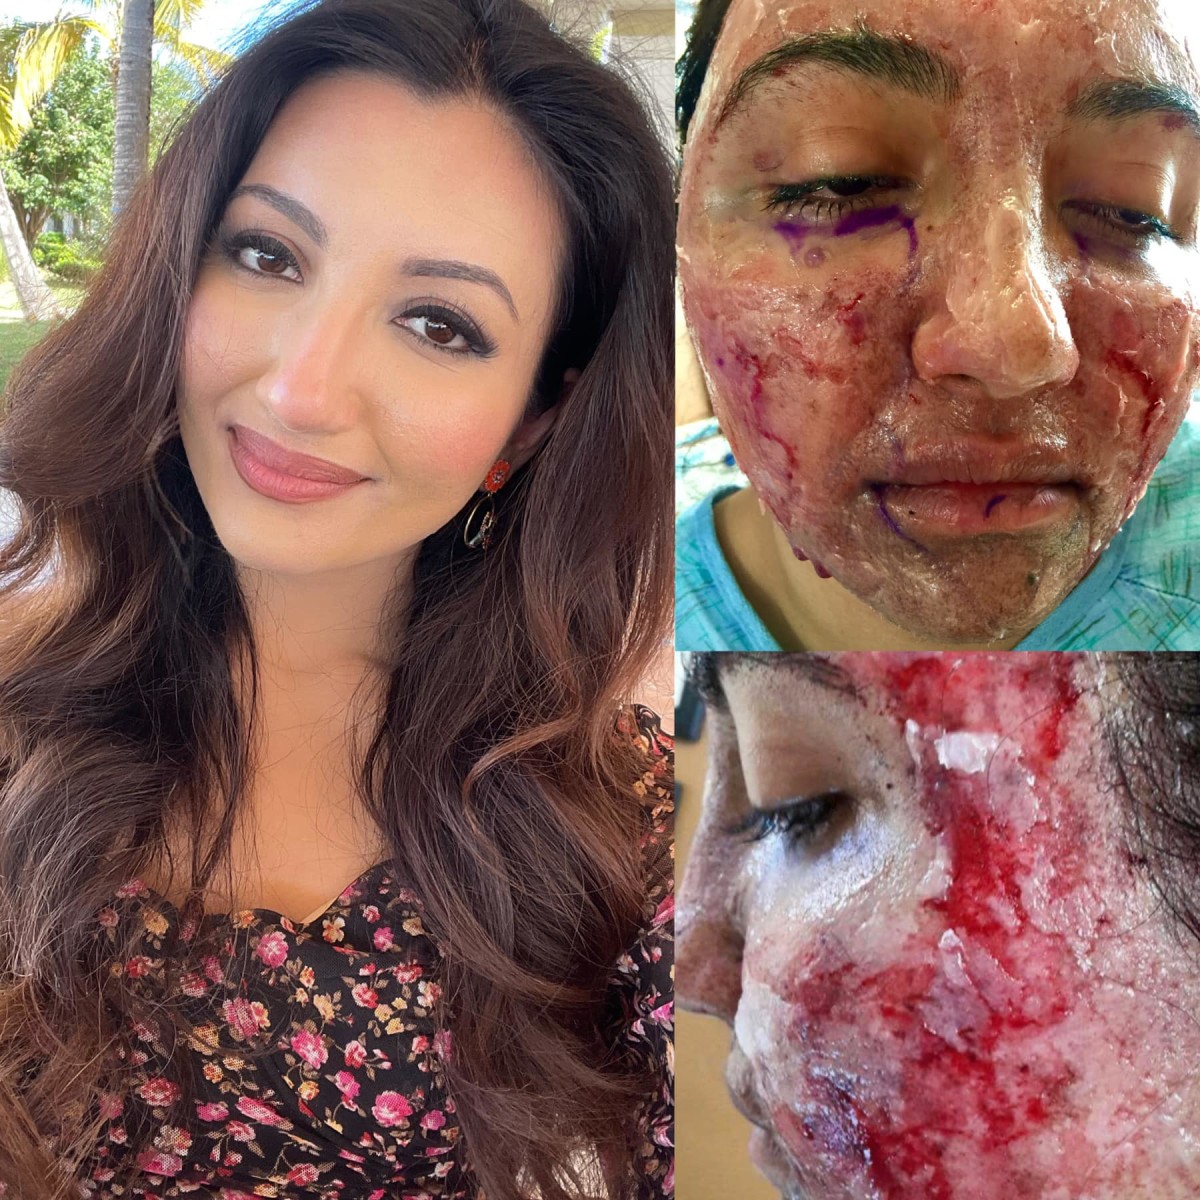 Shree Saini facial wounds